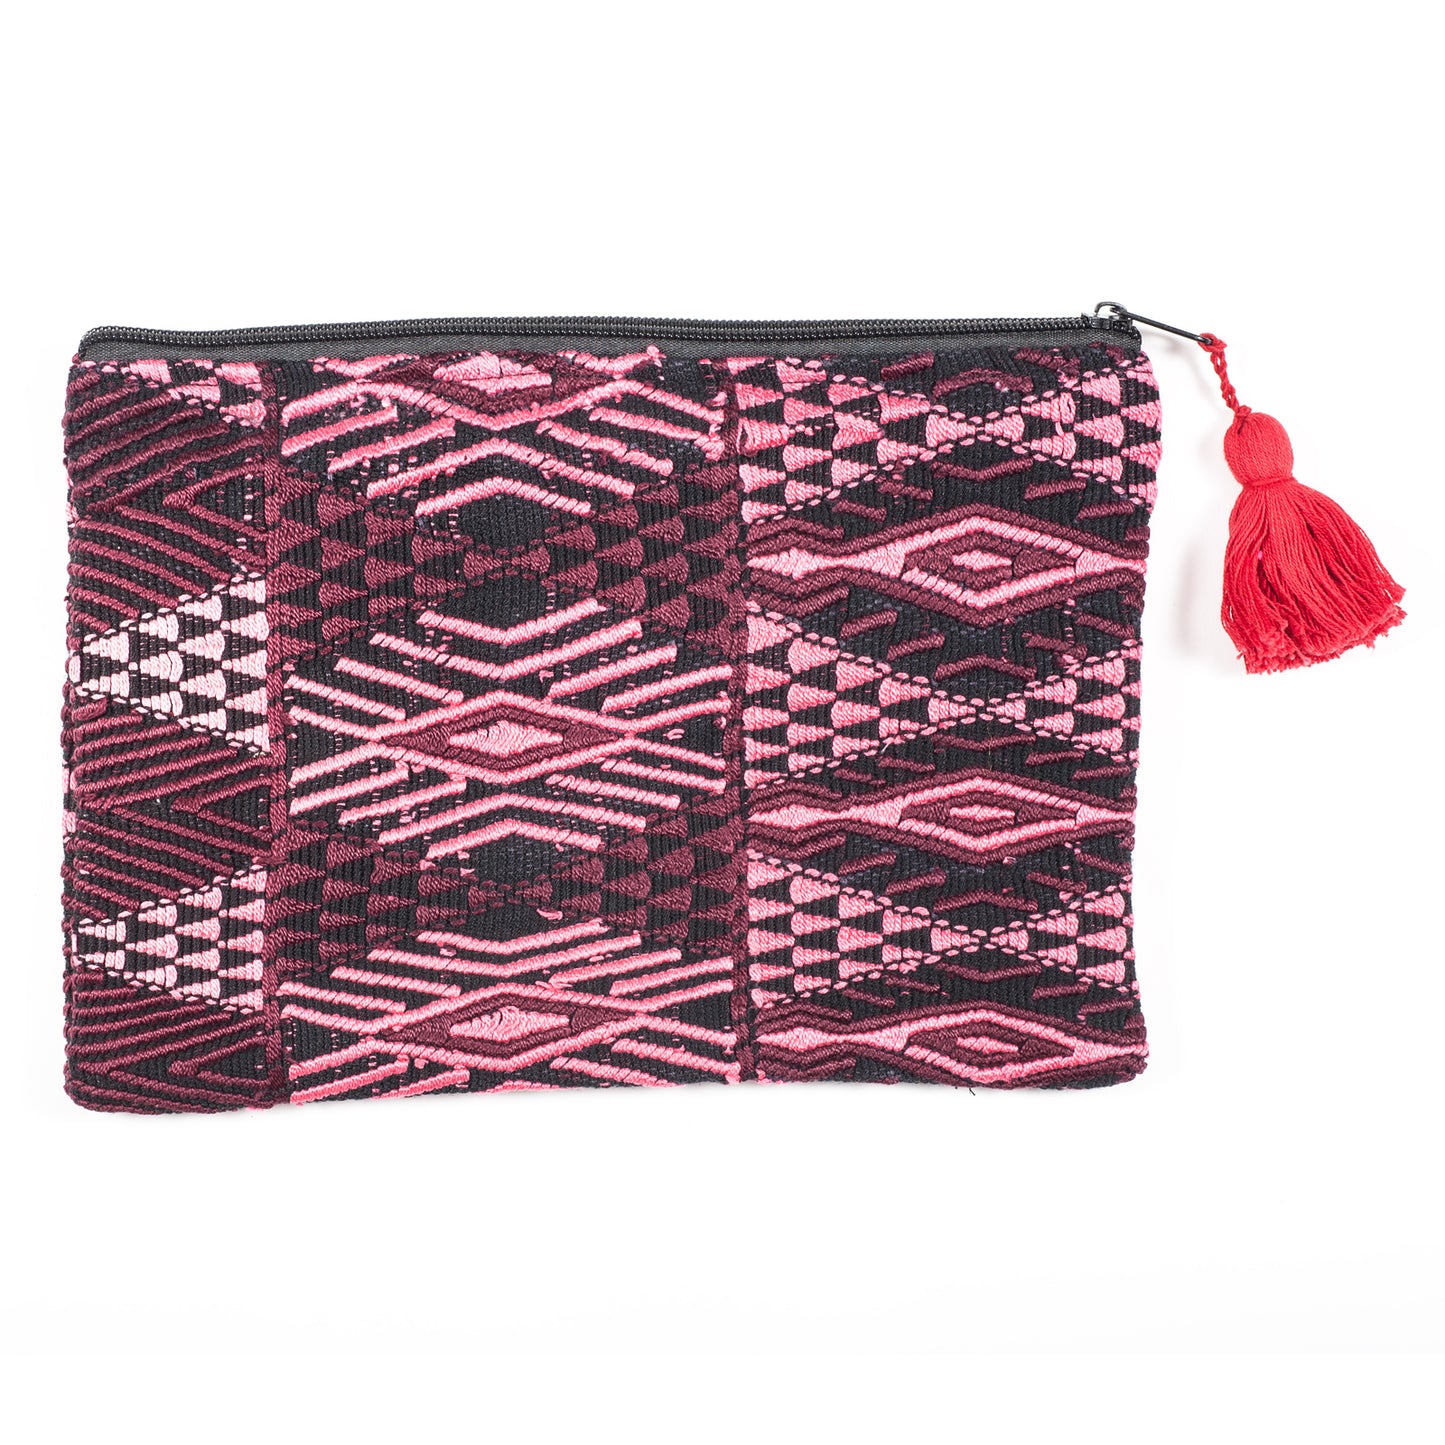 Upcycled Huipil Cosmetic Bag (Guatemala) - Style 3